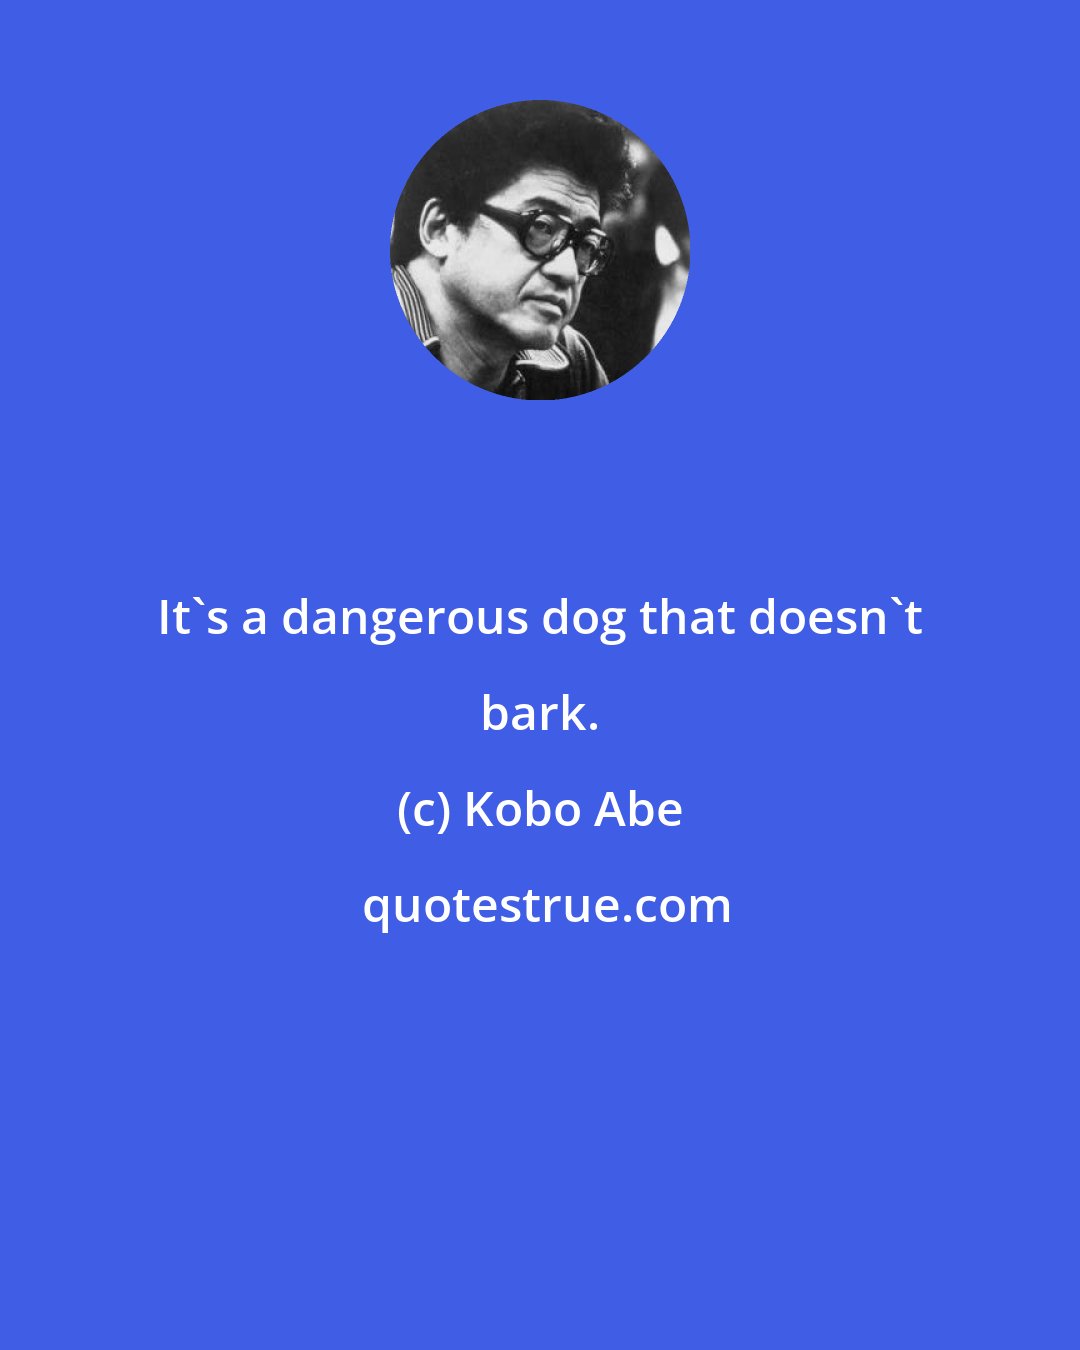 Kobo Abe: It's a dangerous dog that doesn't bark.